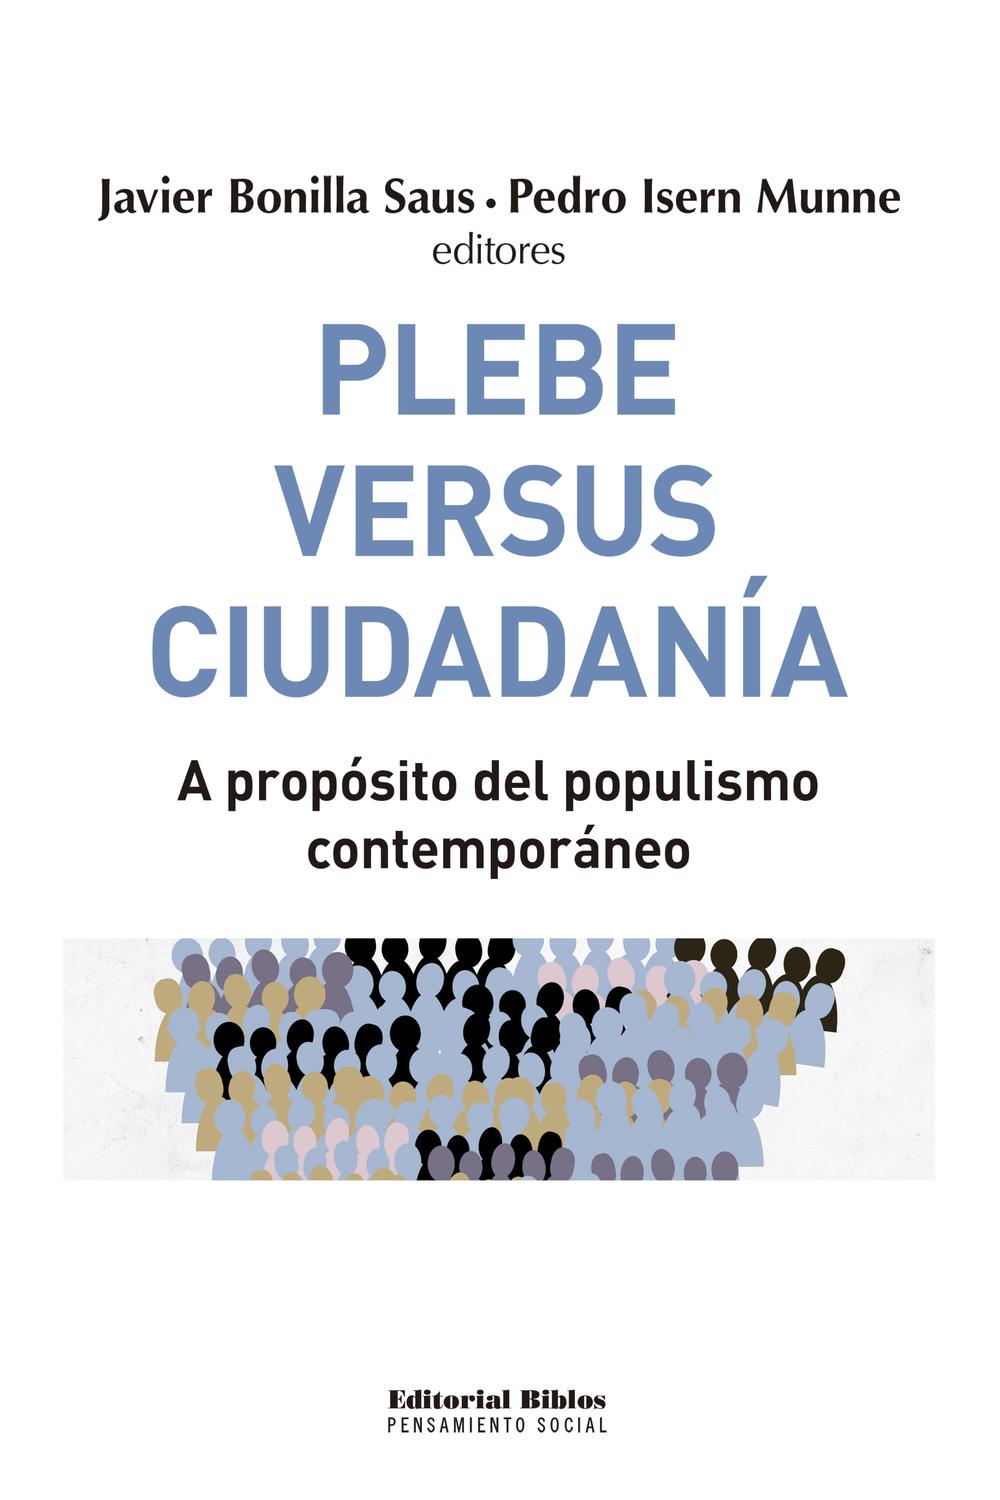 Plebe versus ciudadanía - Pedro Isern Munne, Javier Bonilla Saus